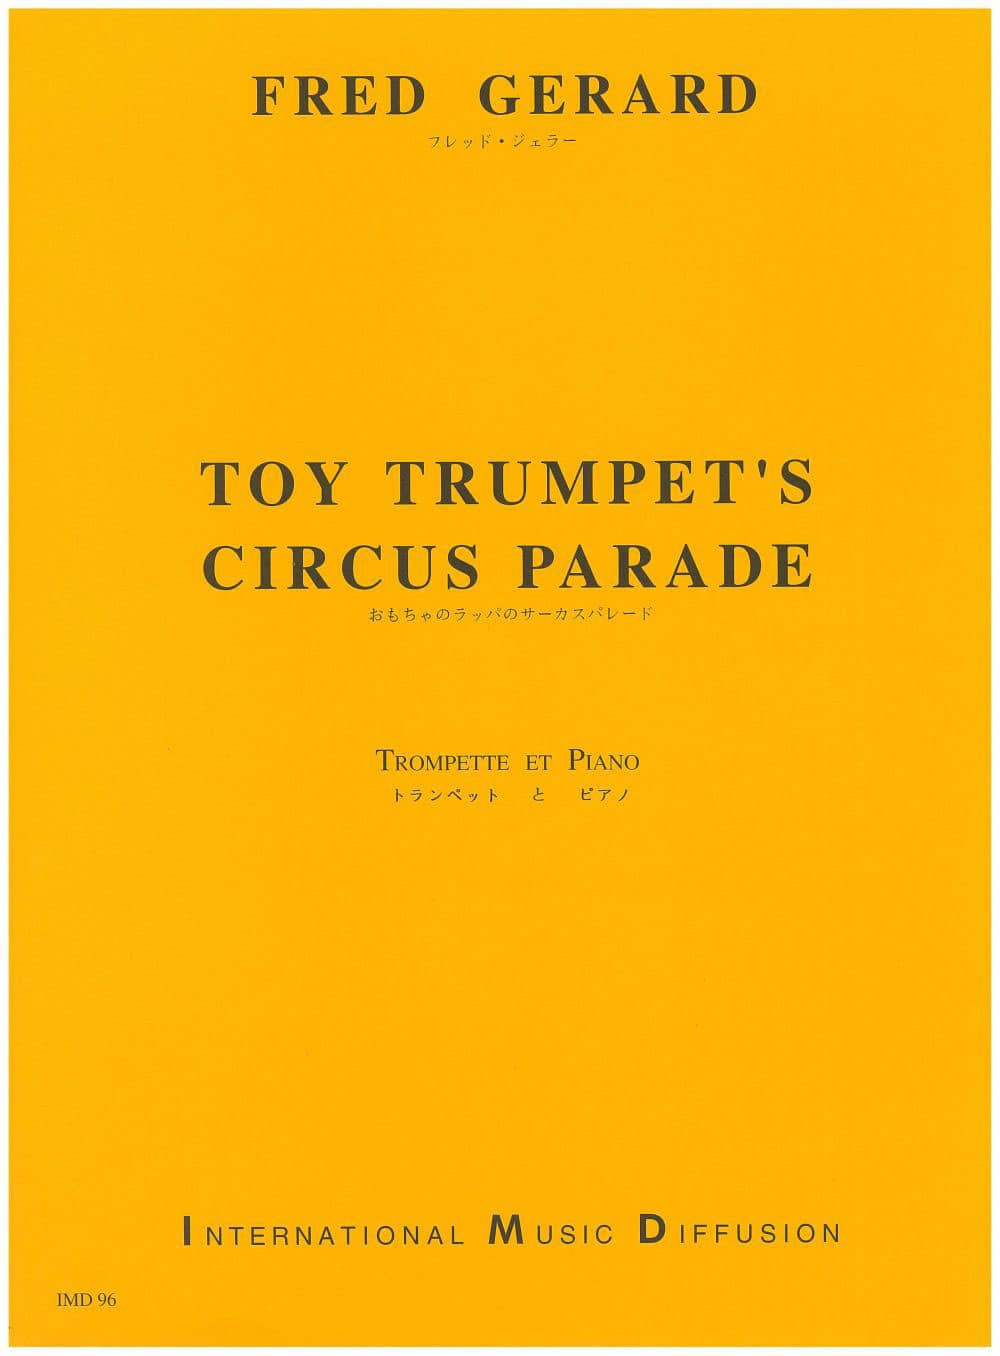 IMD ARPEGES FRED GERARD - TOY TRUMPET'S CIRCUS PARADE - TROMPETTE ET PIANO 